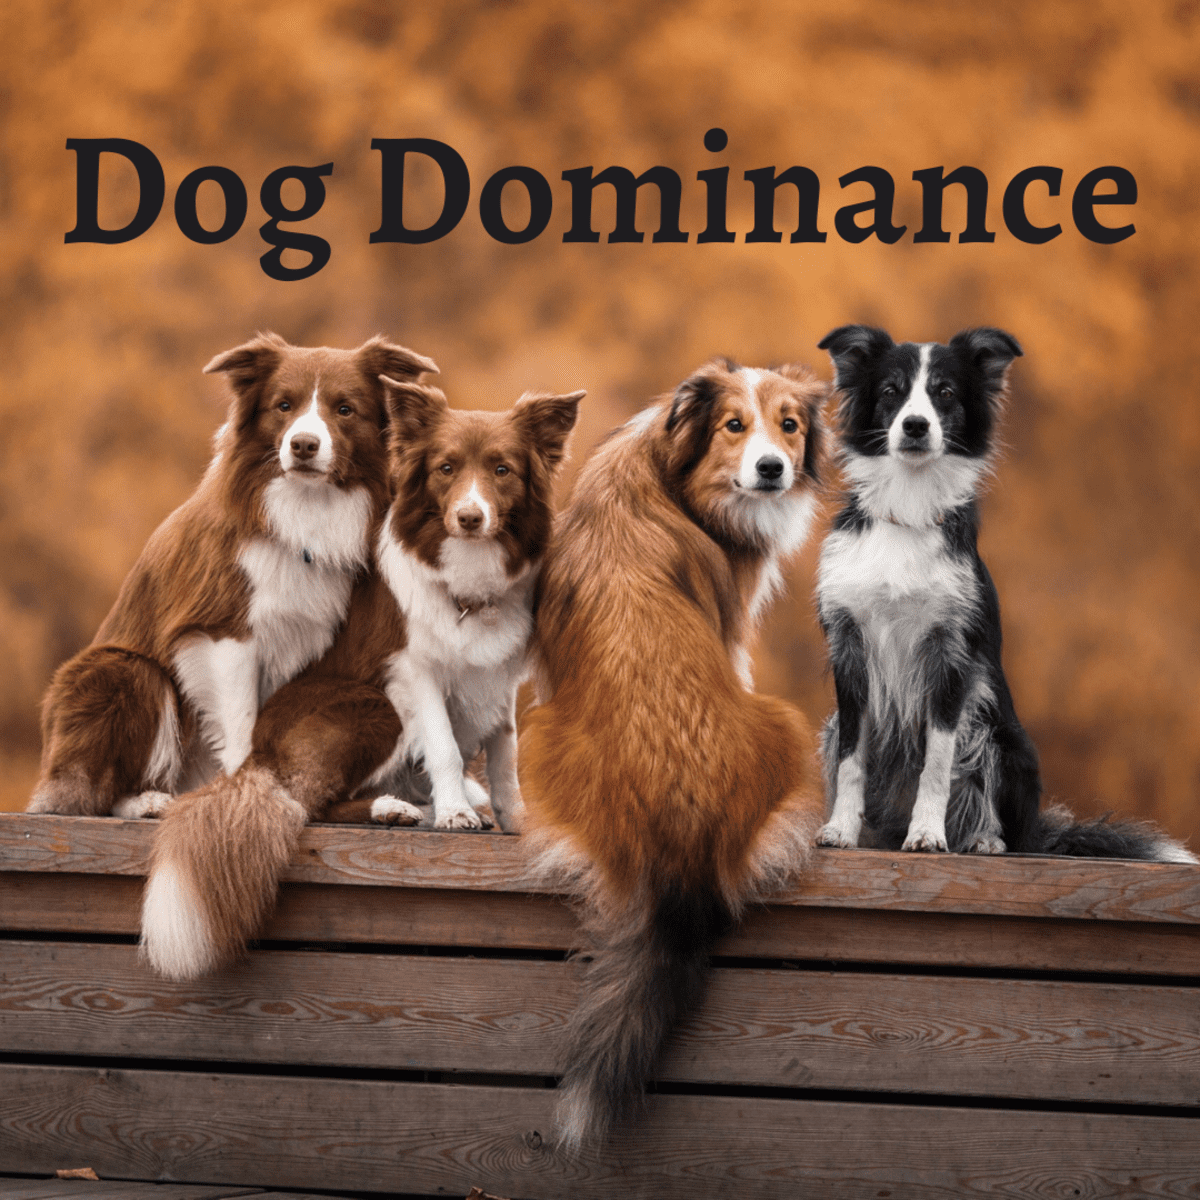 how do i show my dog dominance